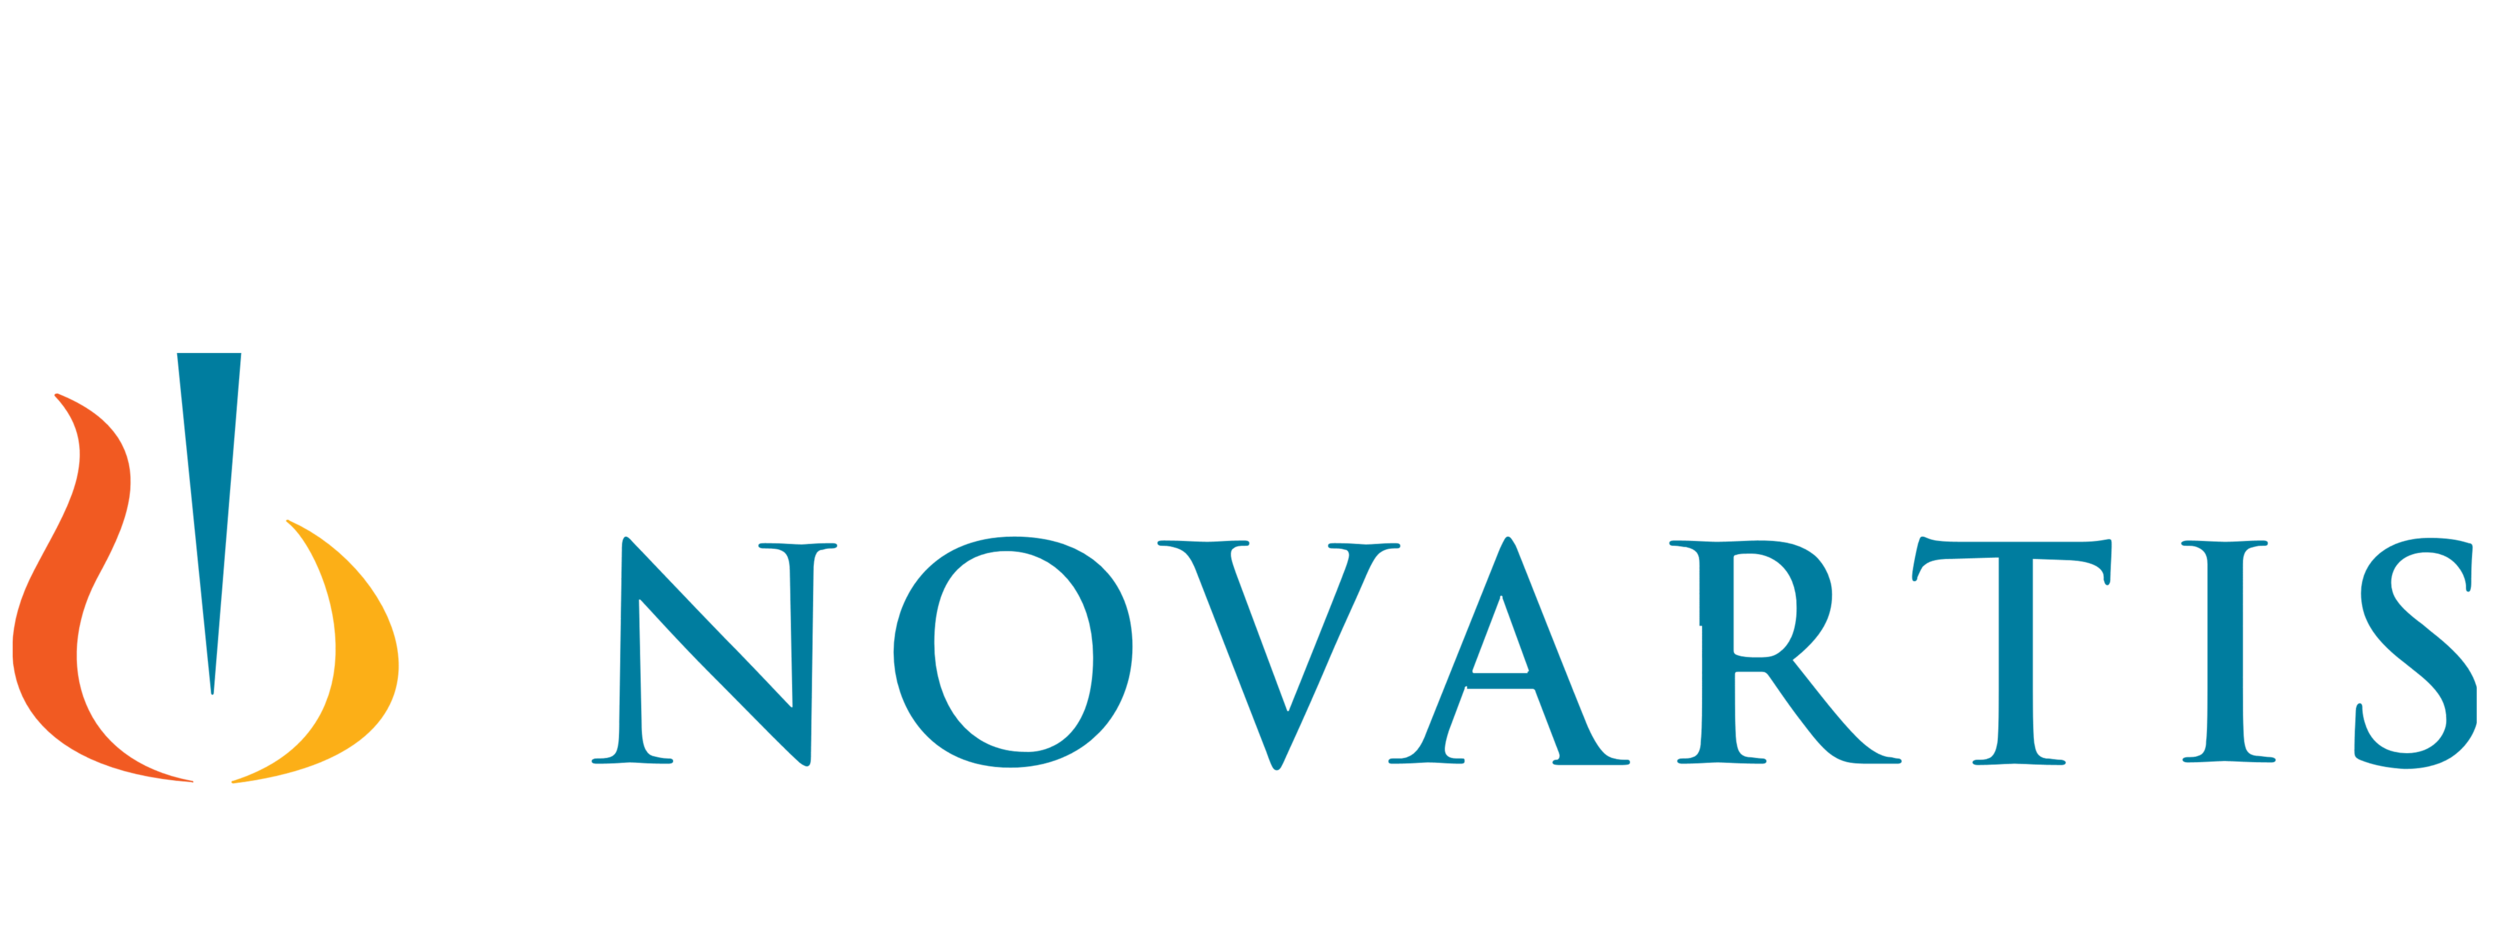 Novartis_logo.png